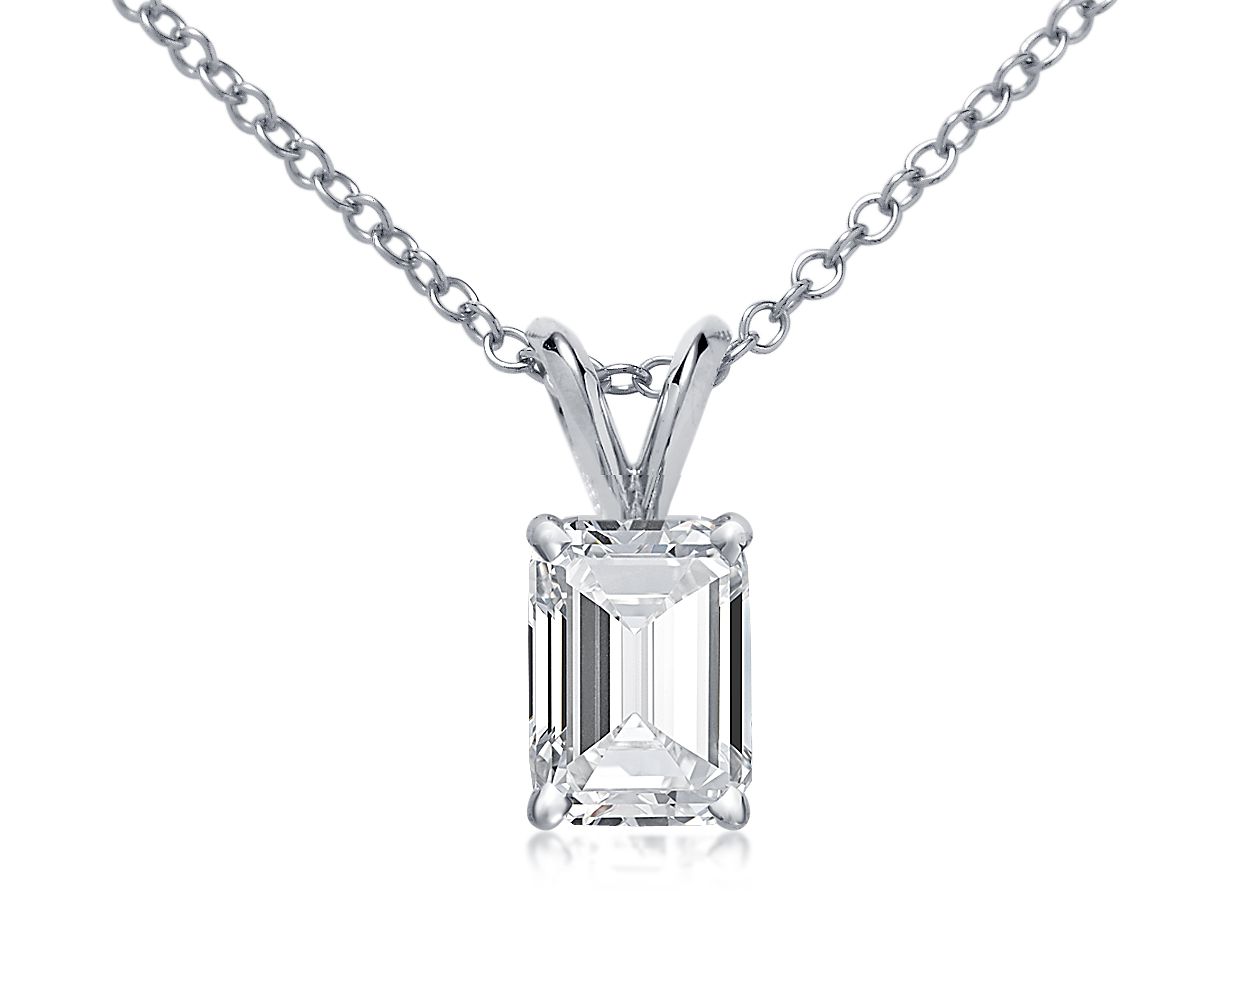 Custom diamond pendant necklace with an emerald diamond